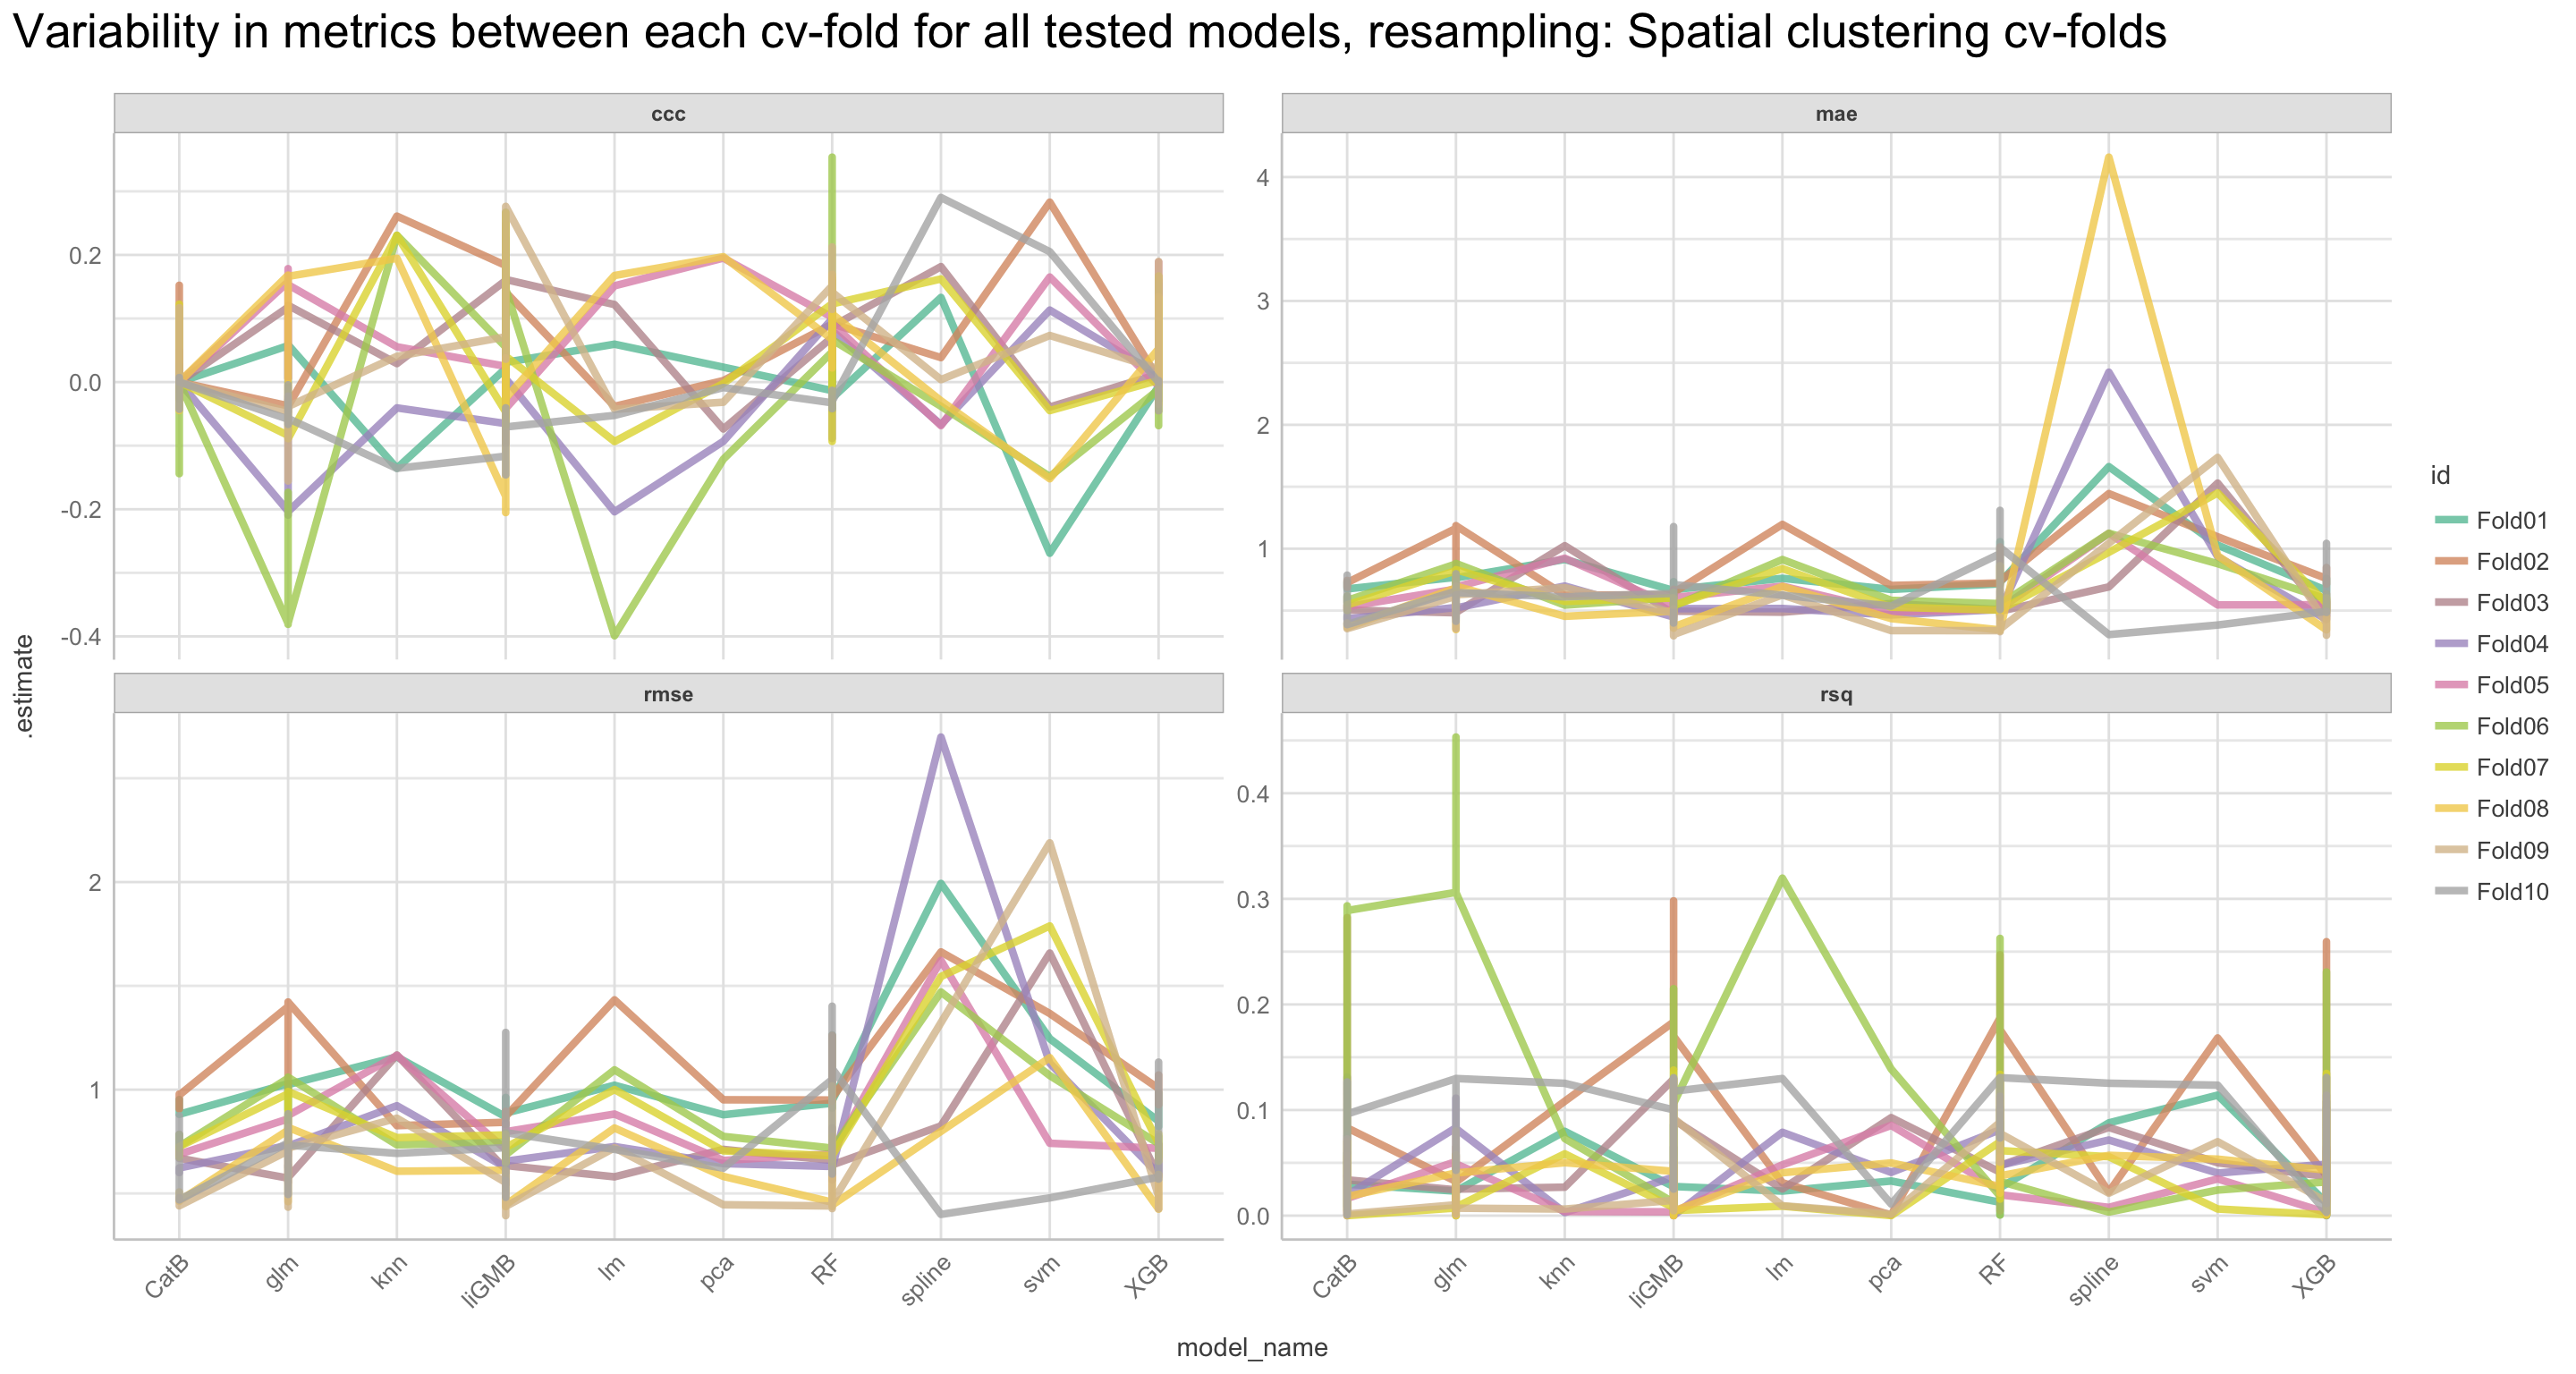 Variability in metrics between each cv-fold for all tested models, resampling: Spatial clustering cv-folds - metrics: CCC, RMSE, MAE, rsq